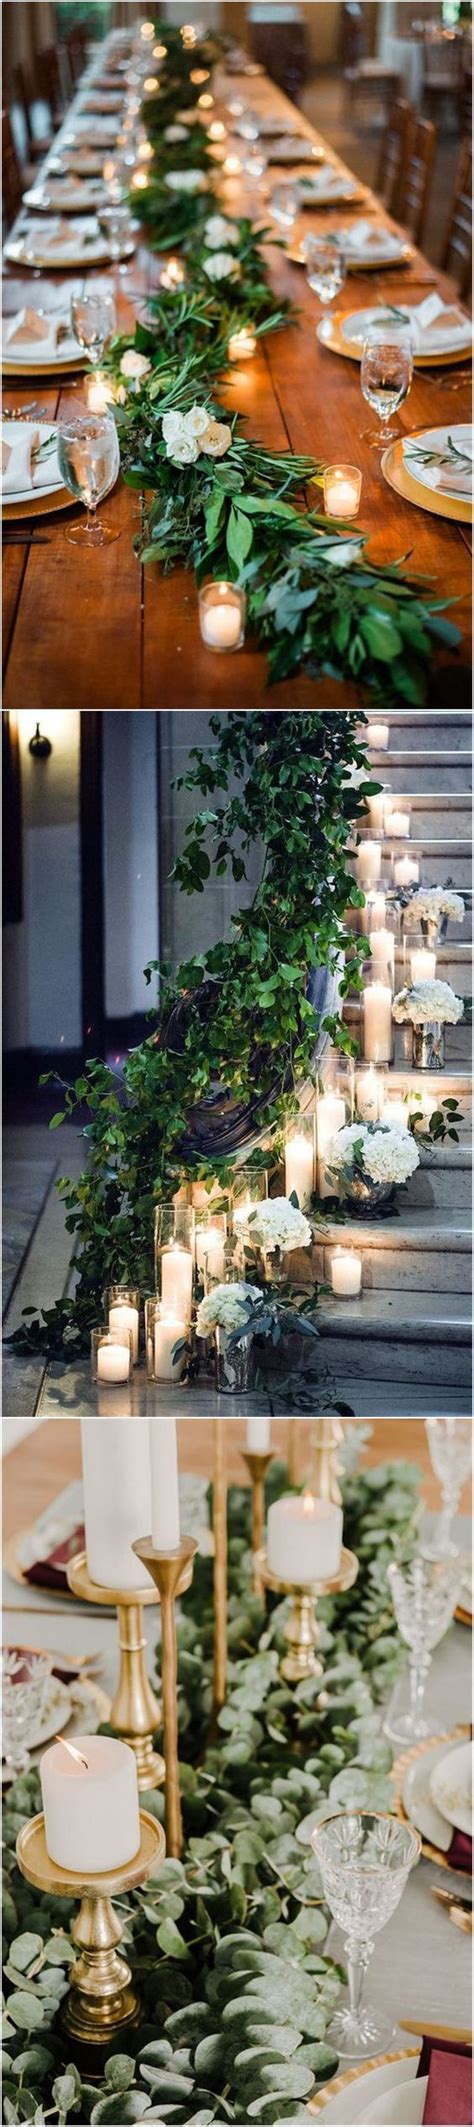 20 Stuning Wedding Candlelight Decoration Ideas You Will Love Wedding